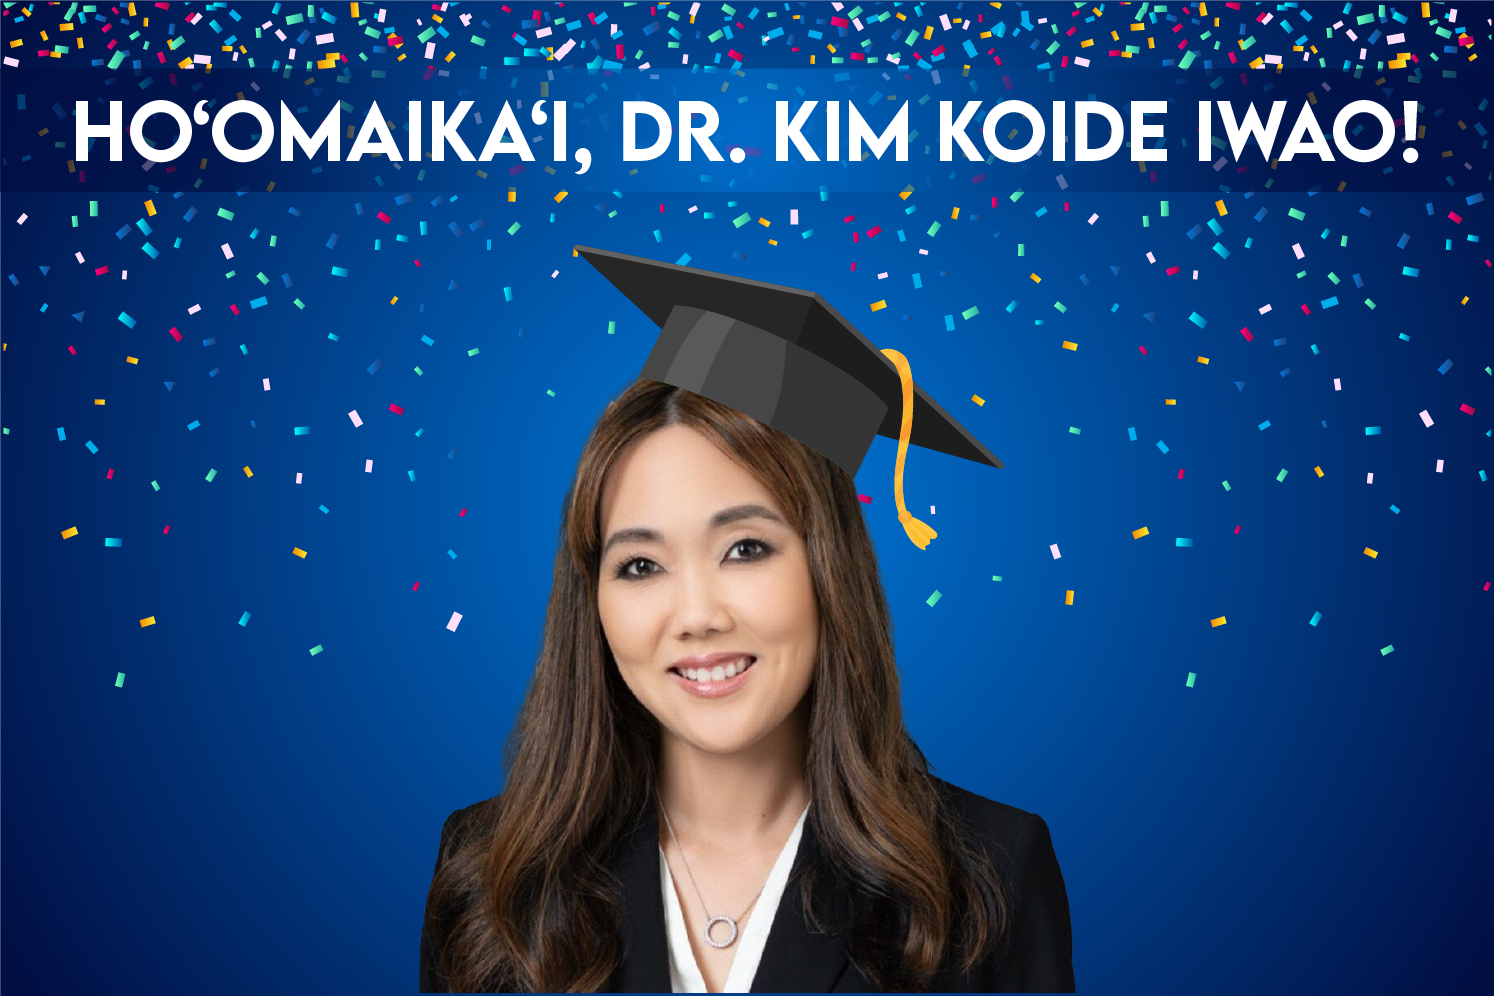 Congratulations Kim Koide Iwao.